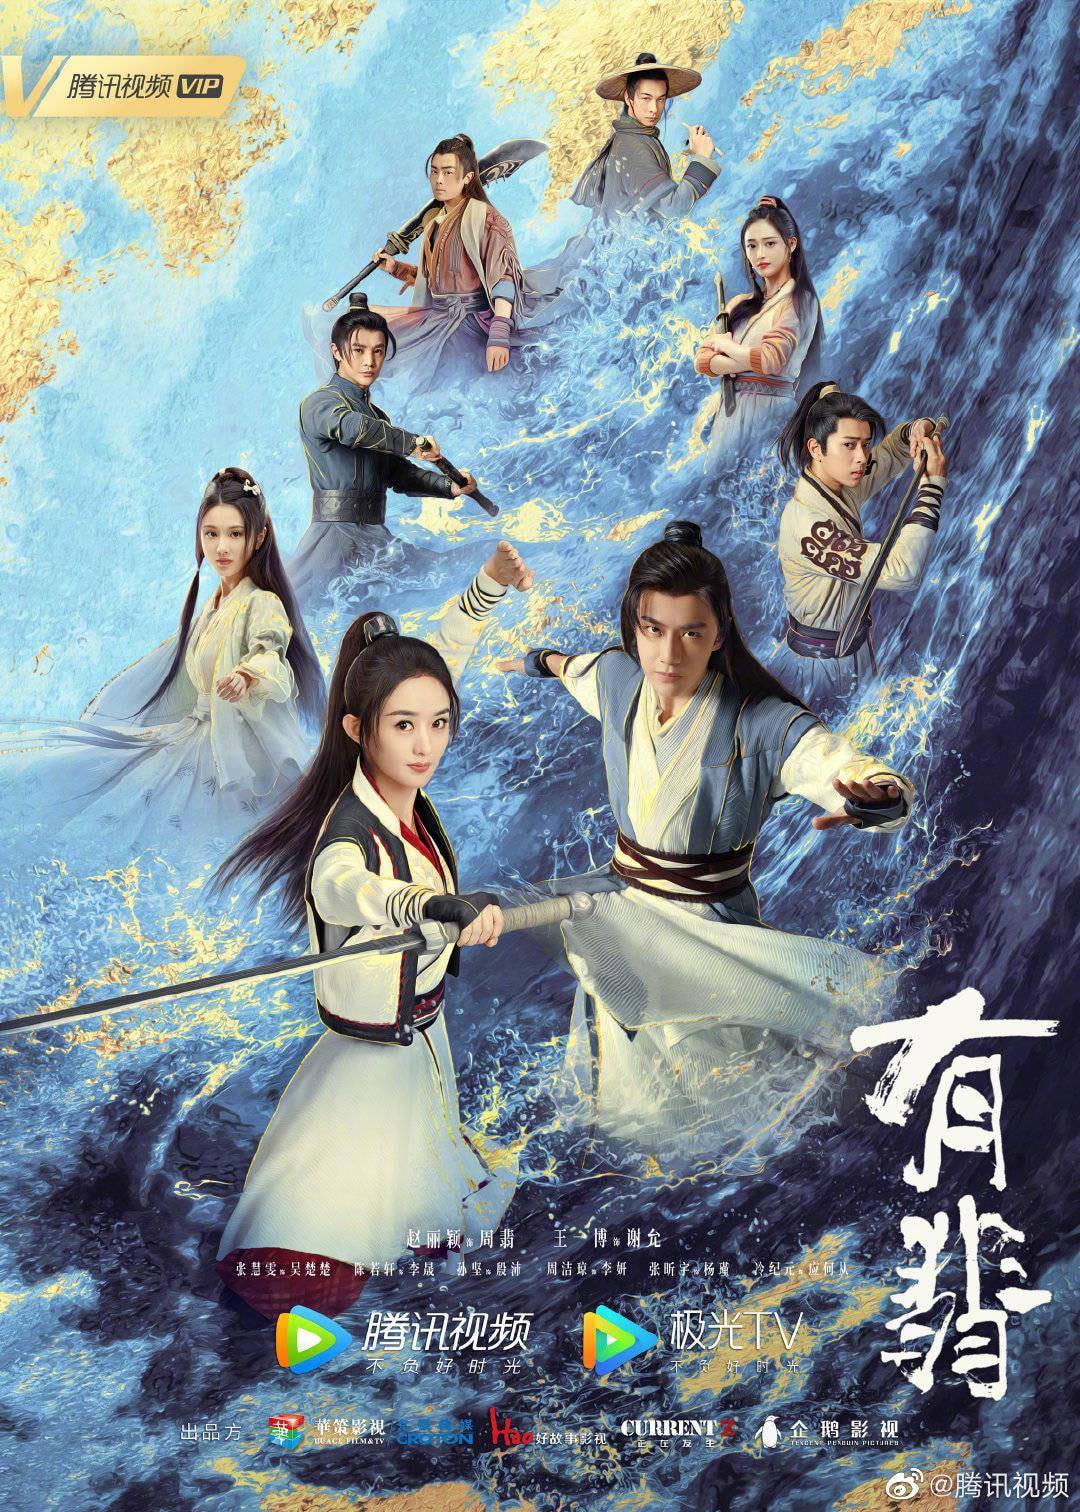 Legend of Fei / Legend of Fei (2020)